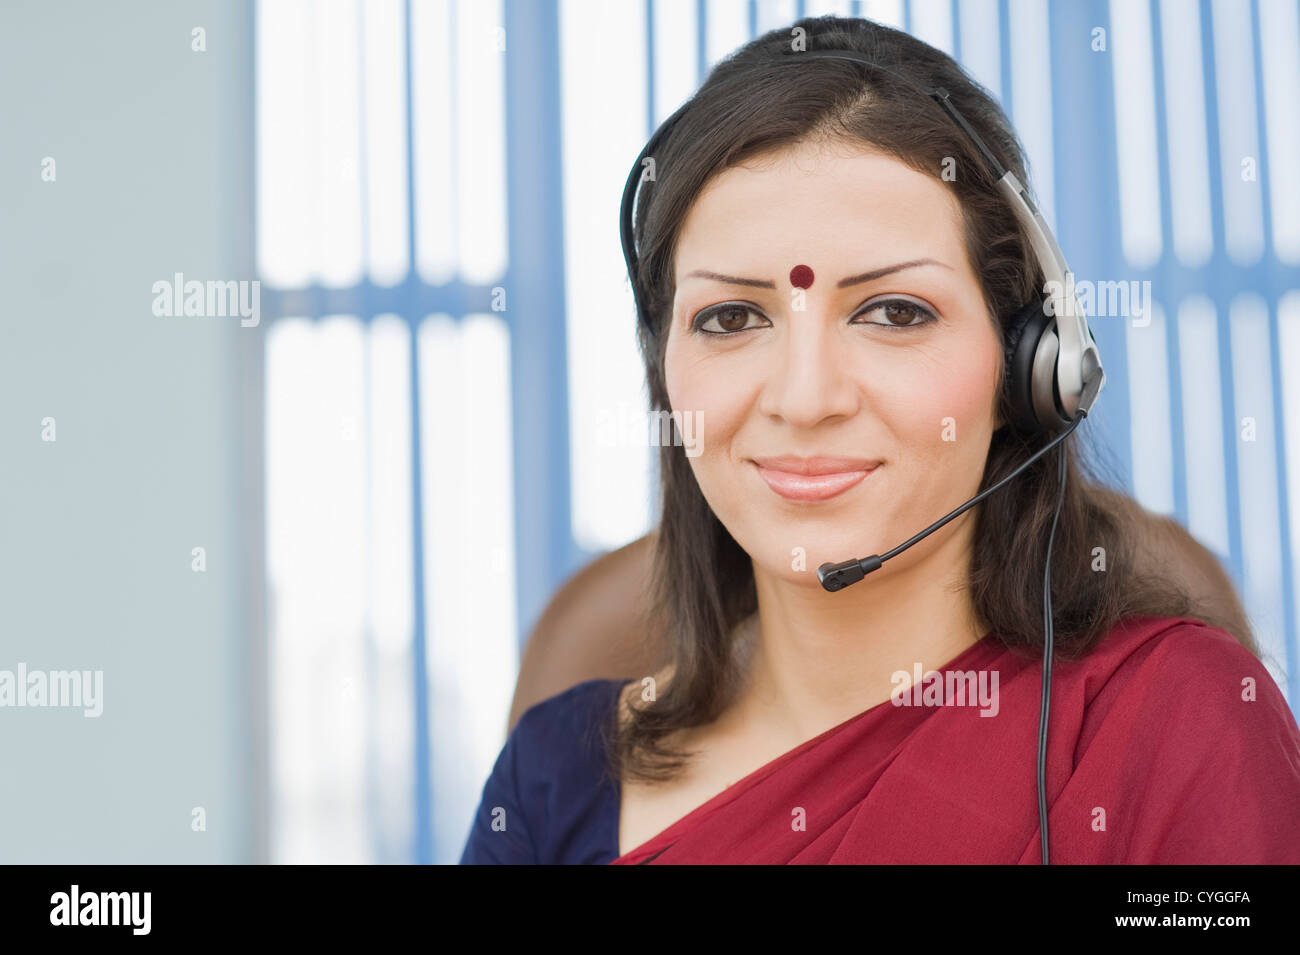 Portrait of a female customer service representative Banque D'Images